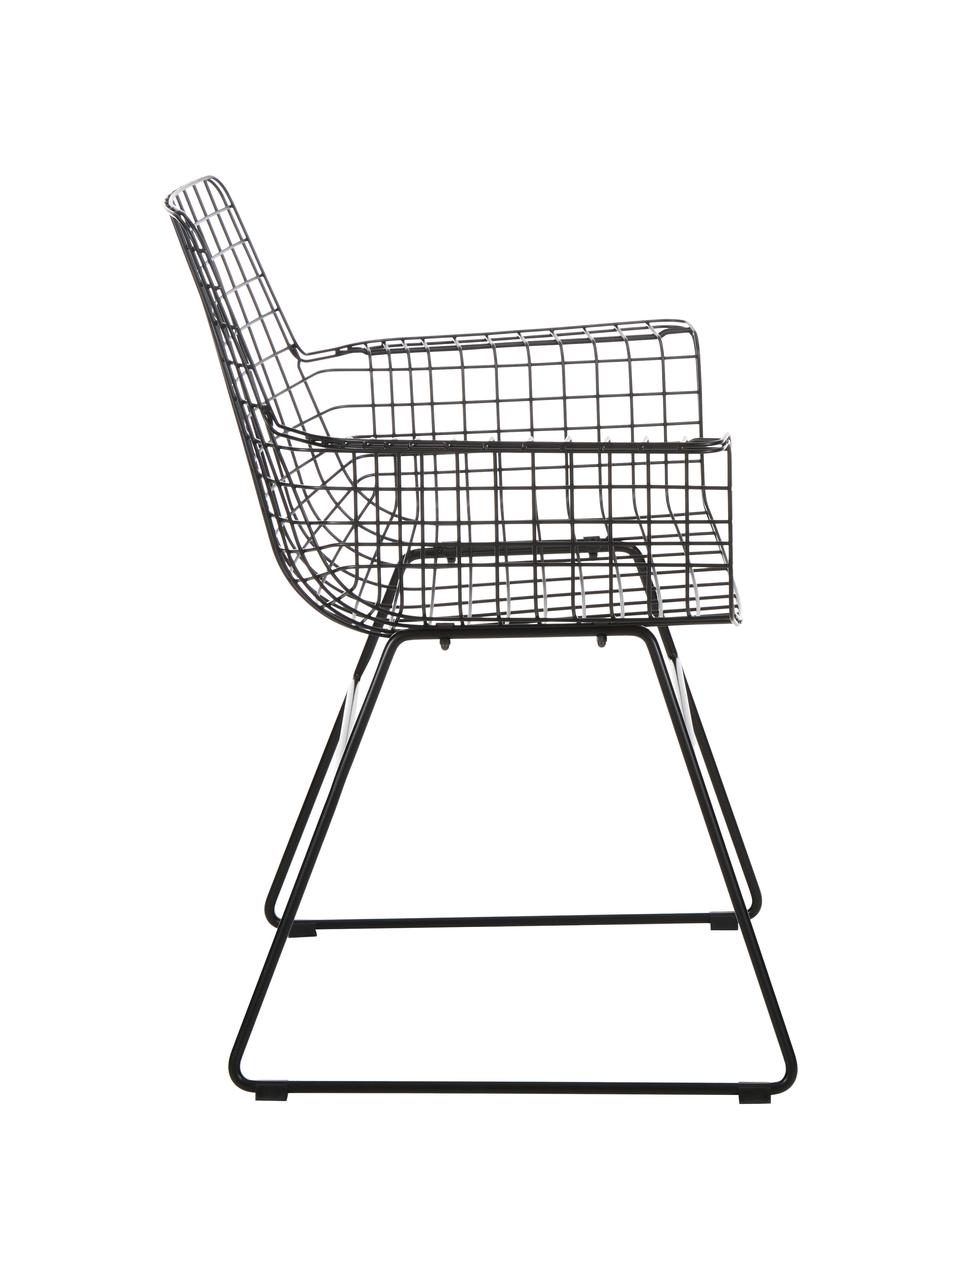 Kovová židle s područkami Wire, Kov s práškovým nástřikem, Černá, Š 72 cm, H 56 cm